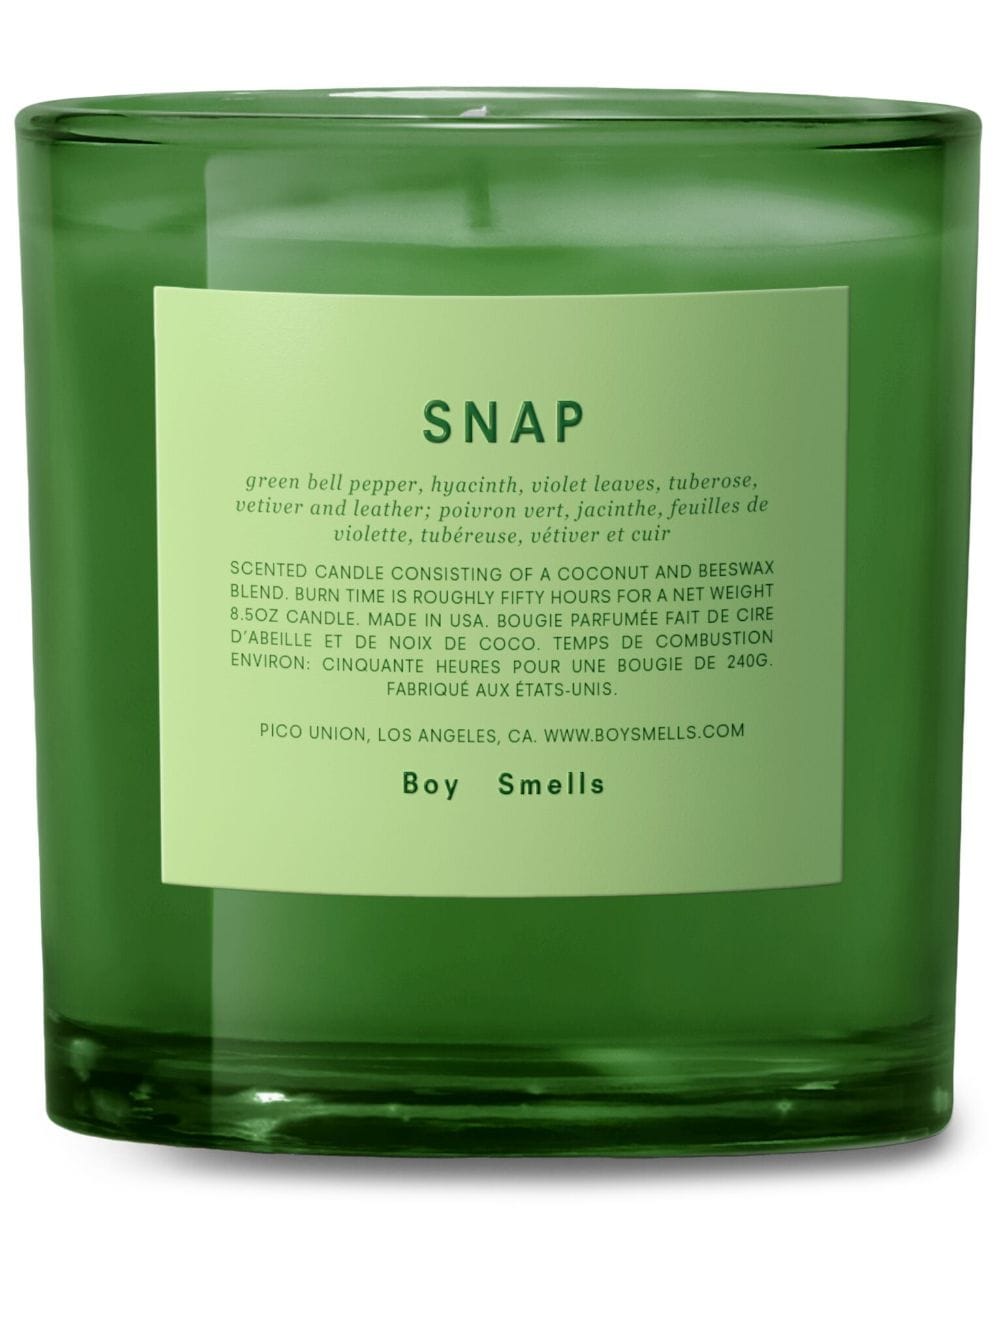 Boy Smells Snap Duftkerze (240g) - Grün von Boy Smells